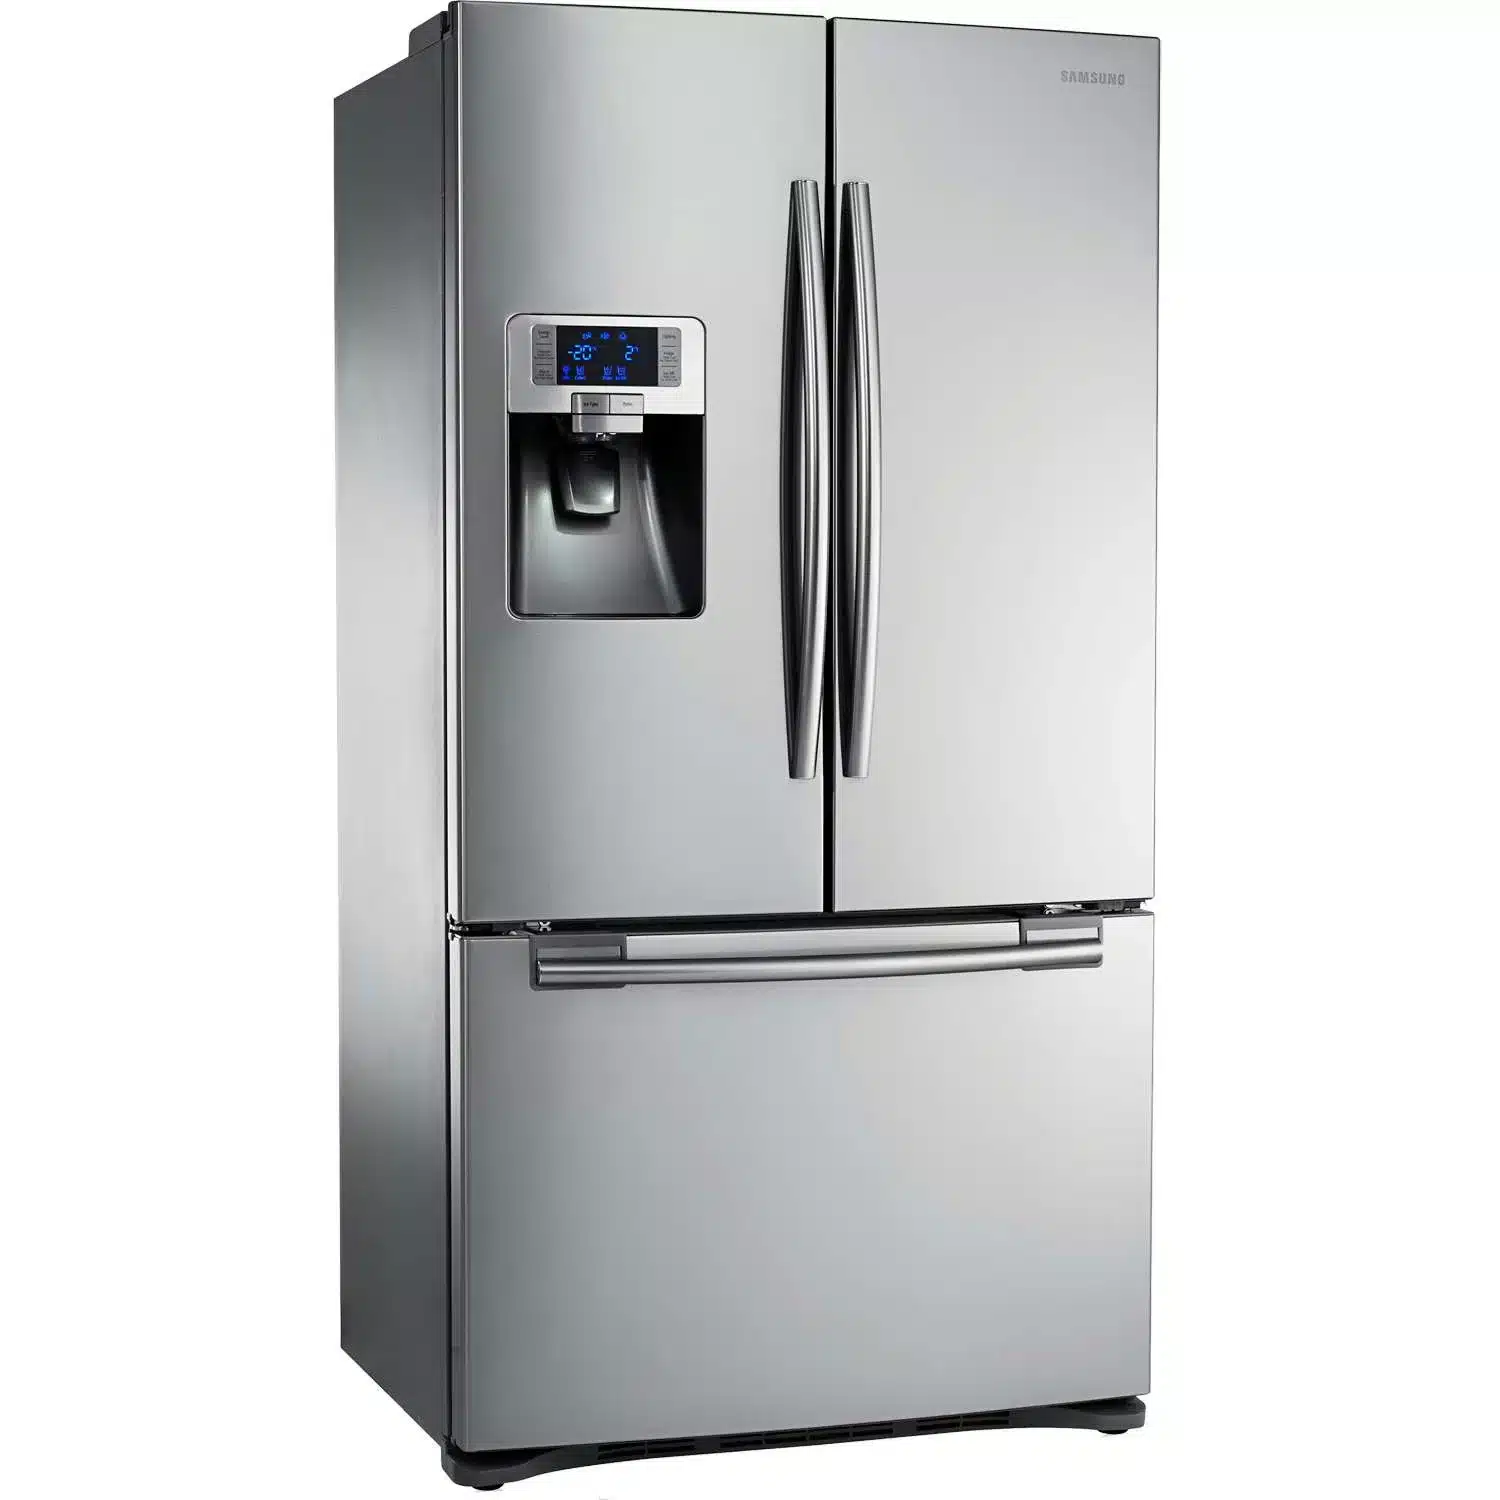 cool-down-how-to-make-samsung-fridge-make-more-ice